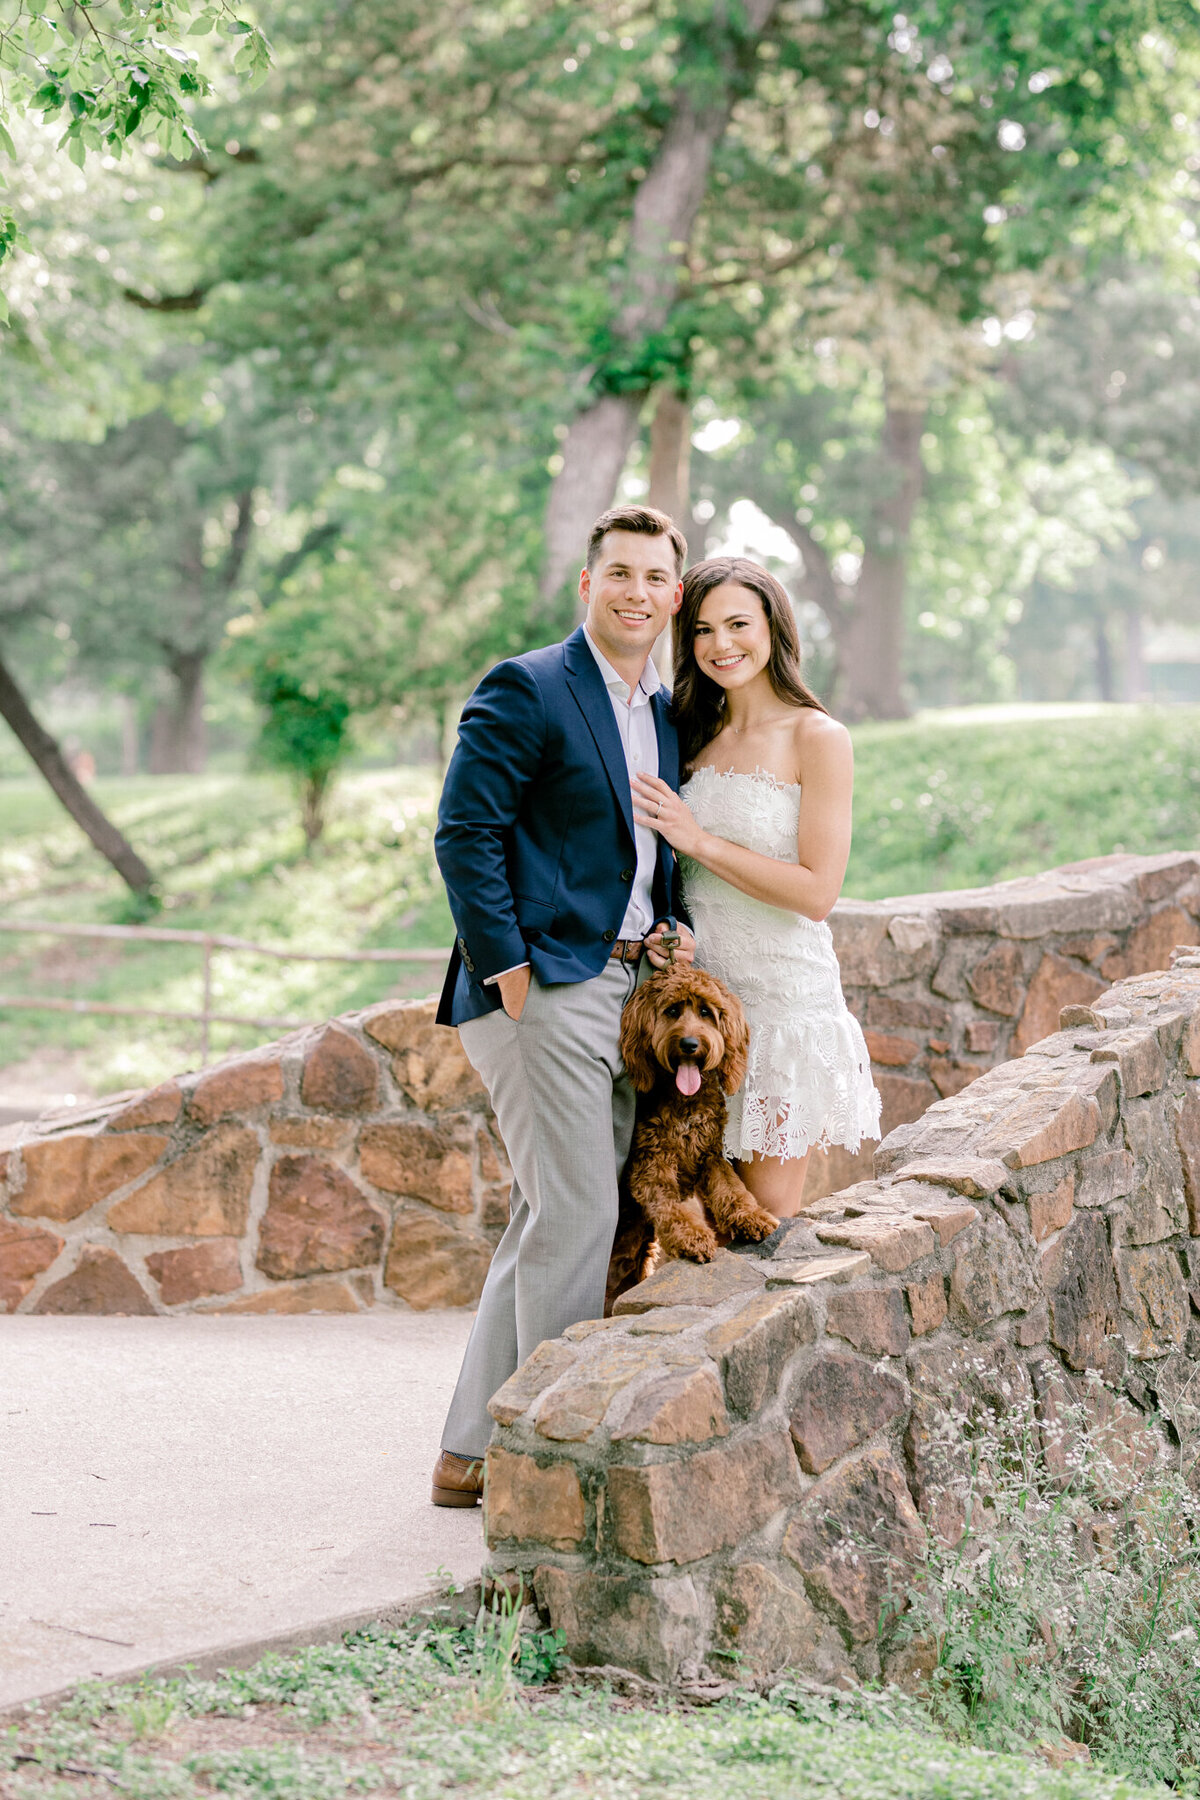 Samantha & Luke's Reverchon Park Engagement Session | Dallas Wedding Photographer | Sami Kathryn Photography-15